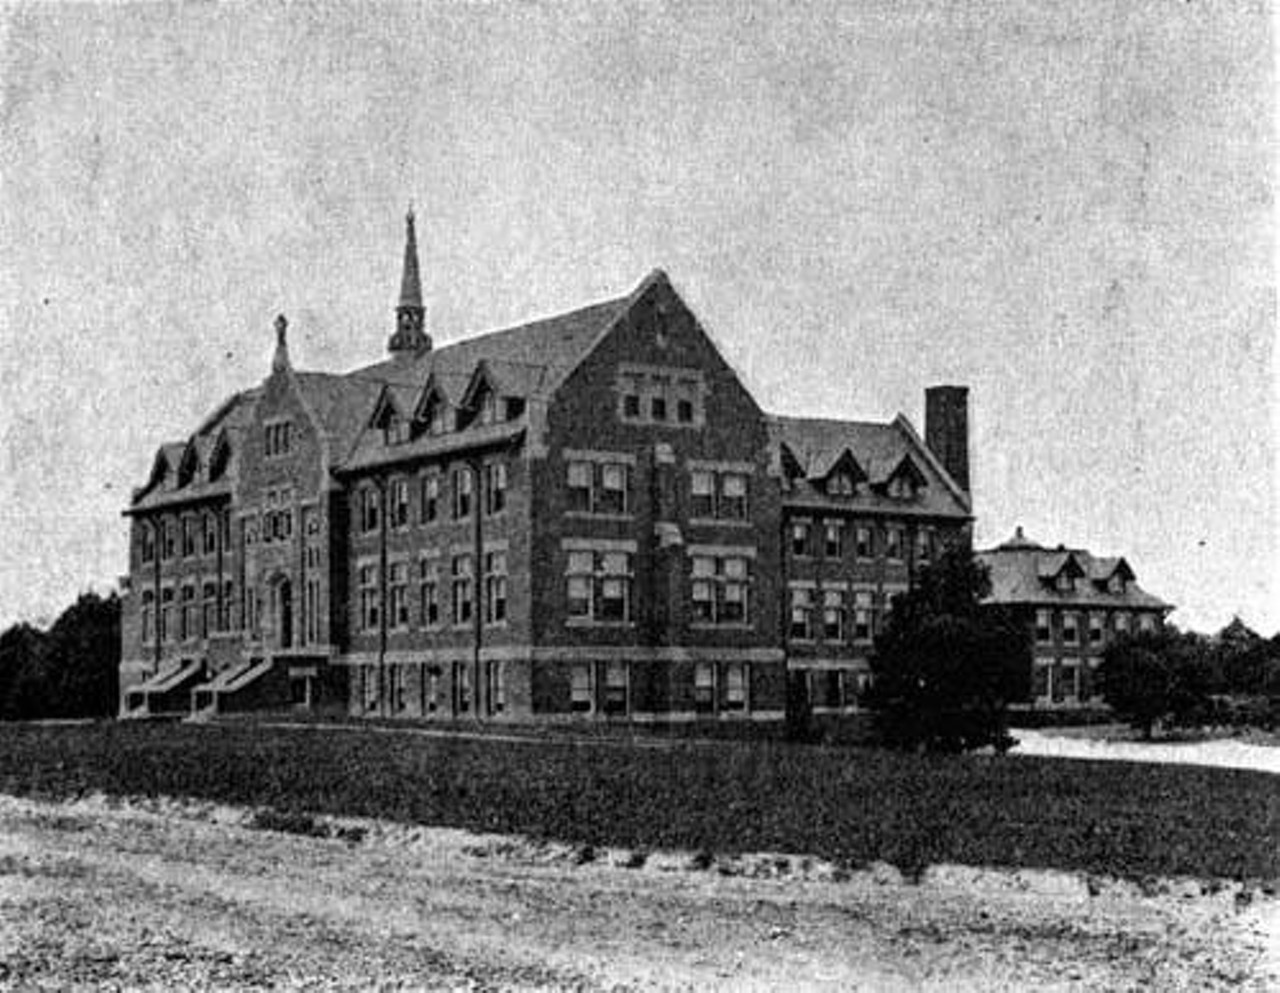  St. Joseph Academy, 1920s 